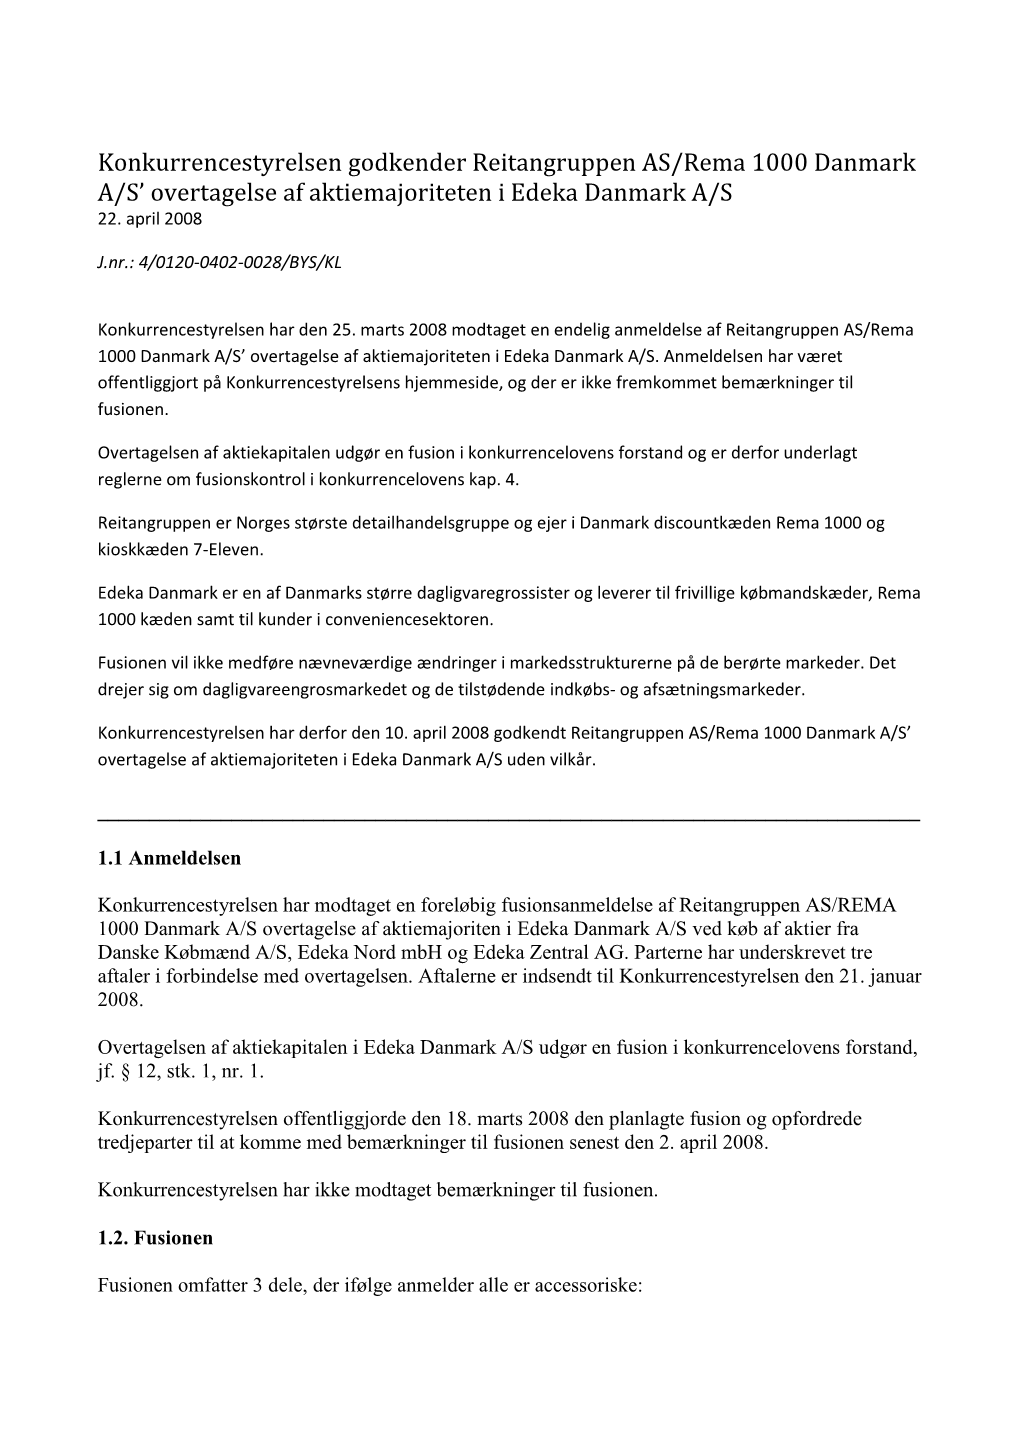 Konkurrencestyrelsen Godkender Reitangruppen AS/Rema 1000 Danmark A/S’ Overtagelse Af Aktiemajoriteten I Edeka Danmark A/S 22